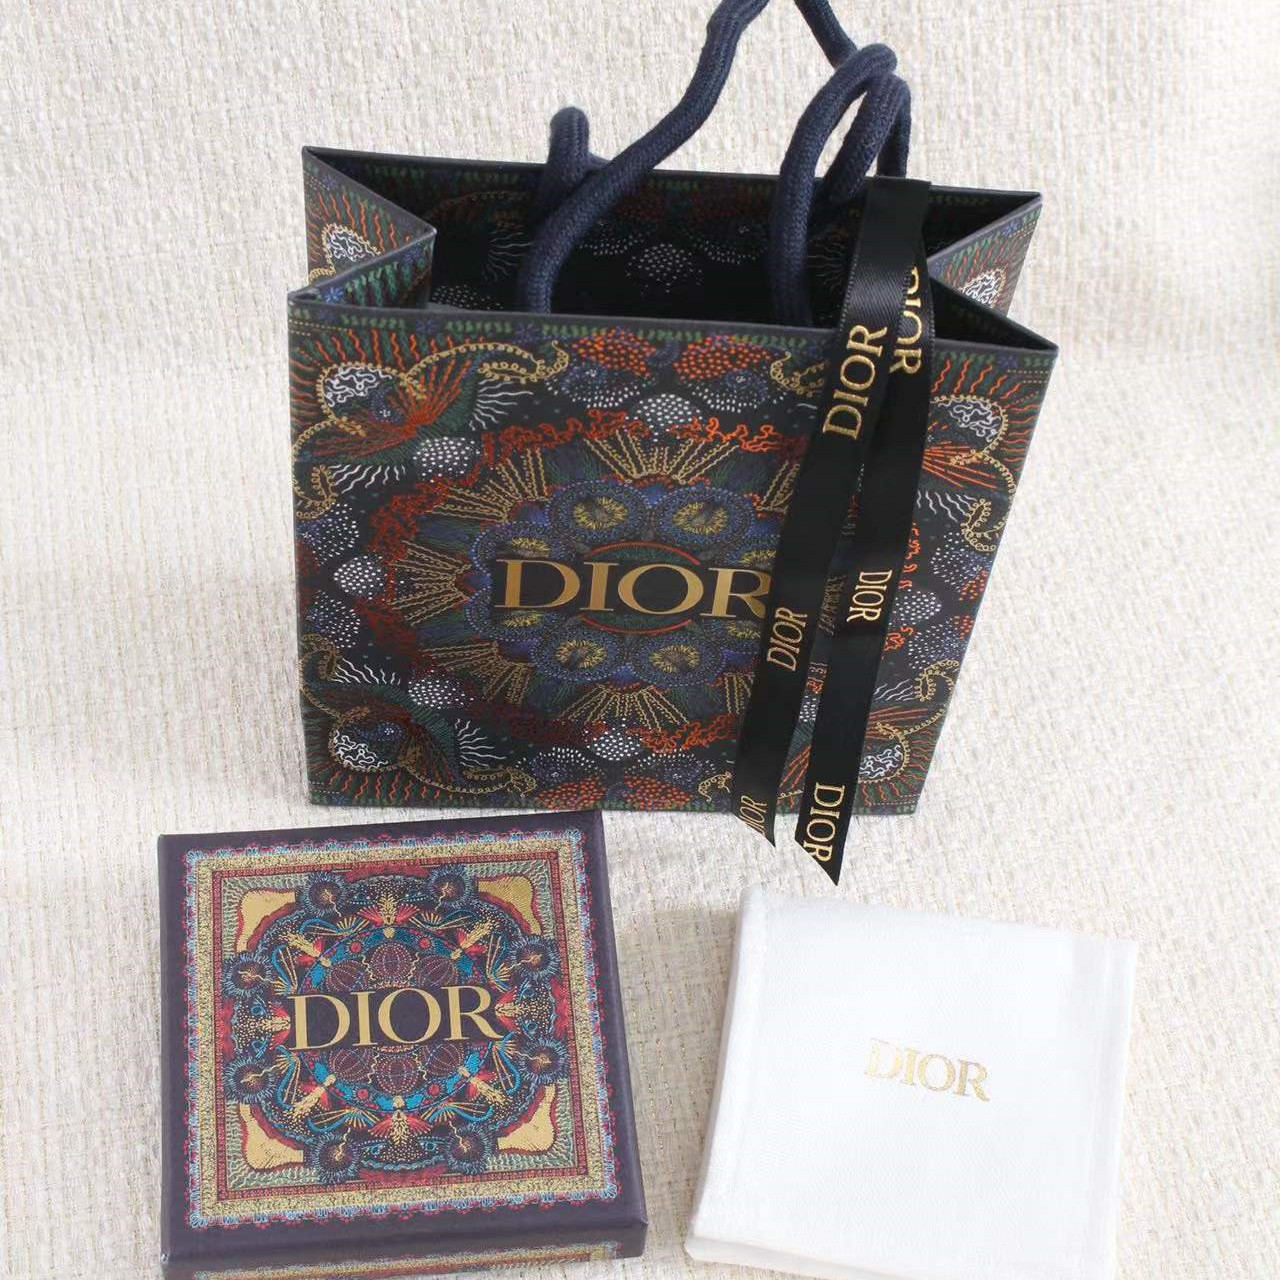 Dior jewelry box 1 set